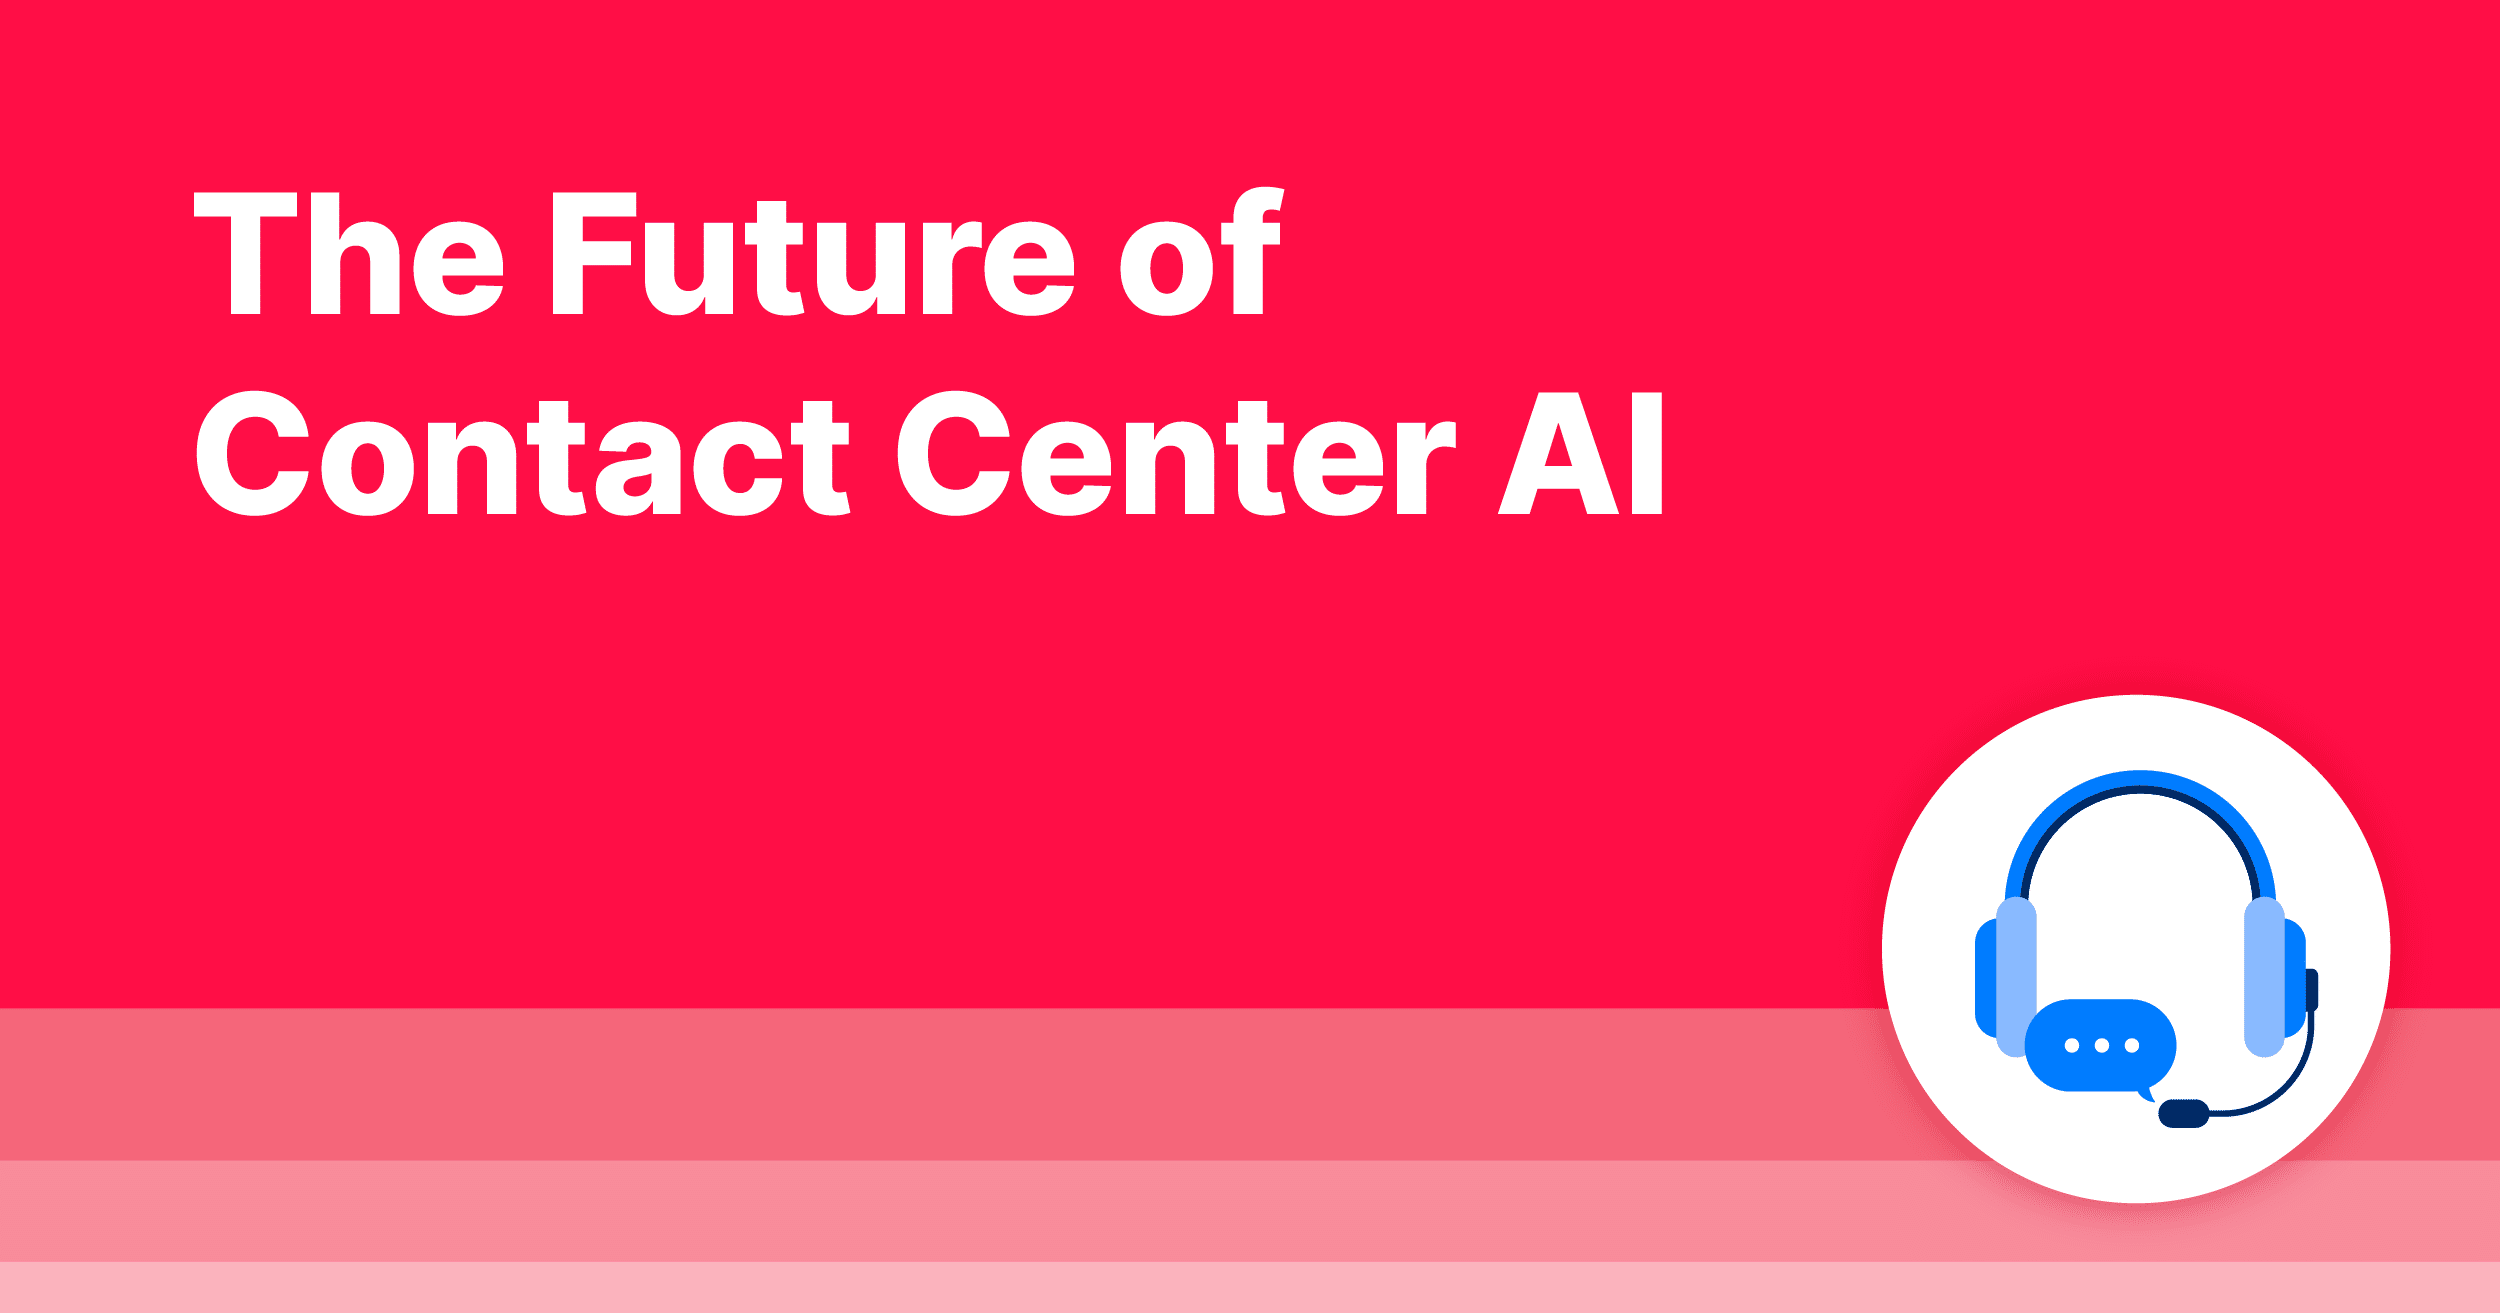 The Future of Contact Center AI